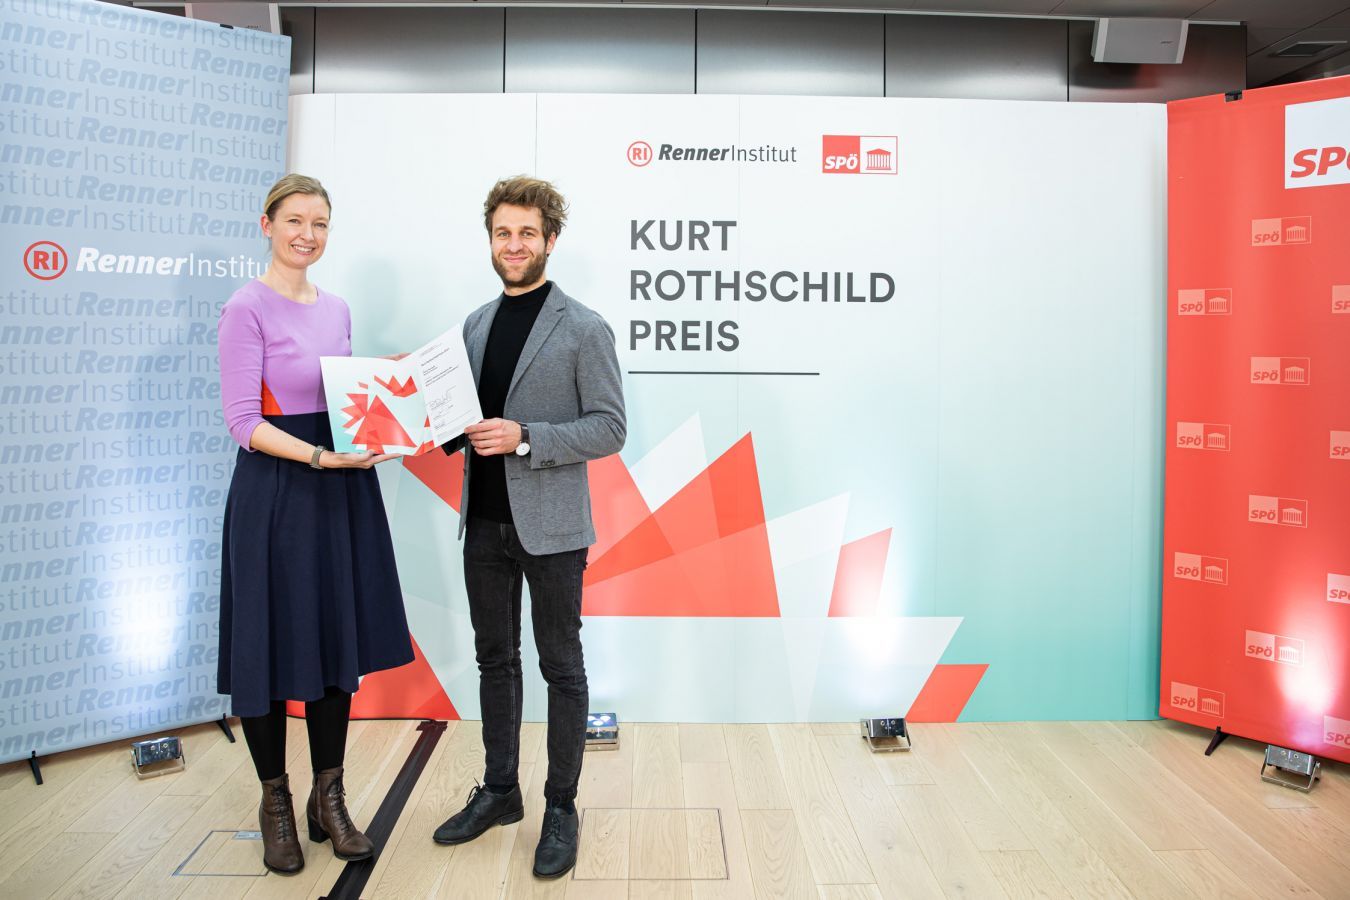 Philip Rathgeb receiving the Kurt Rothschild Prize